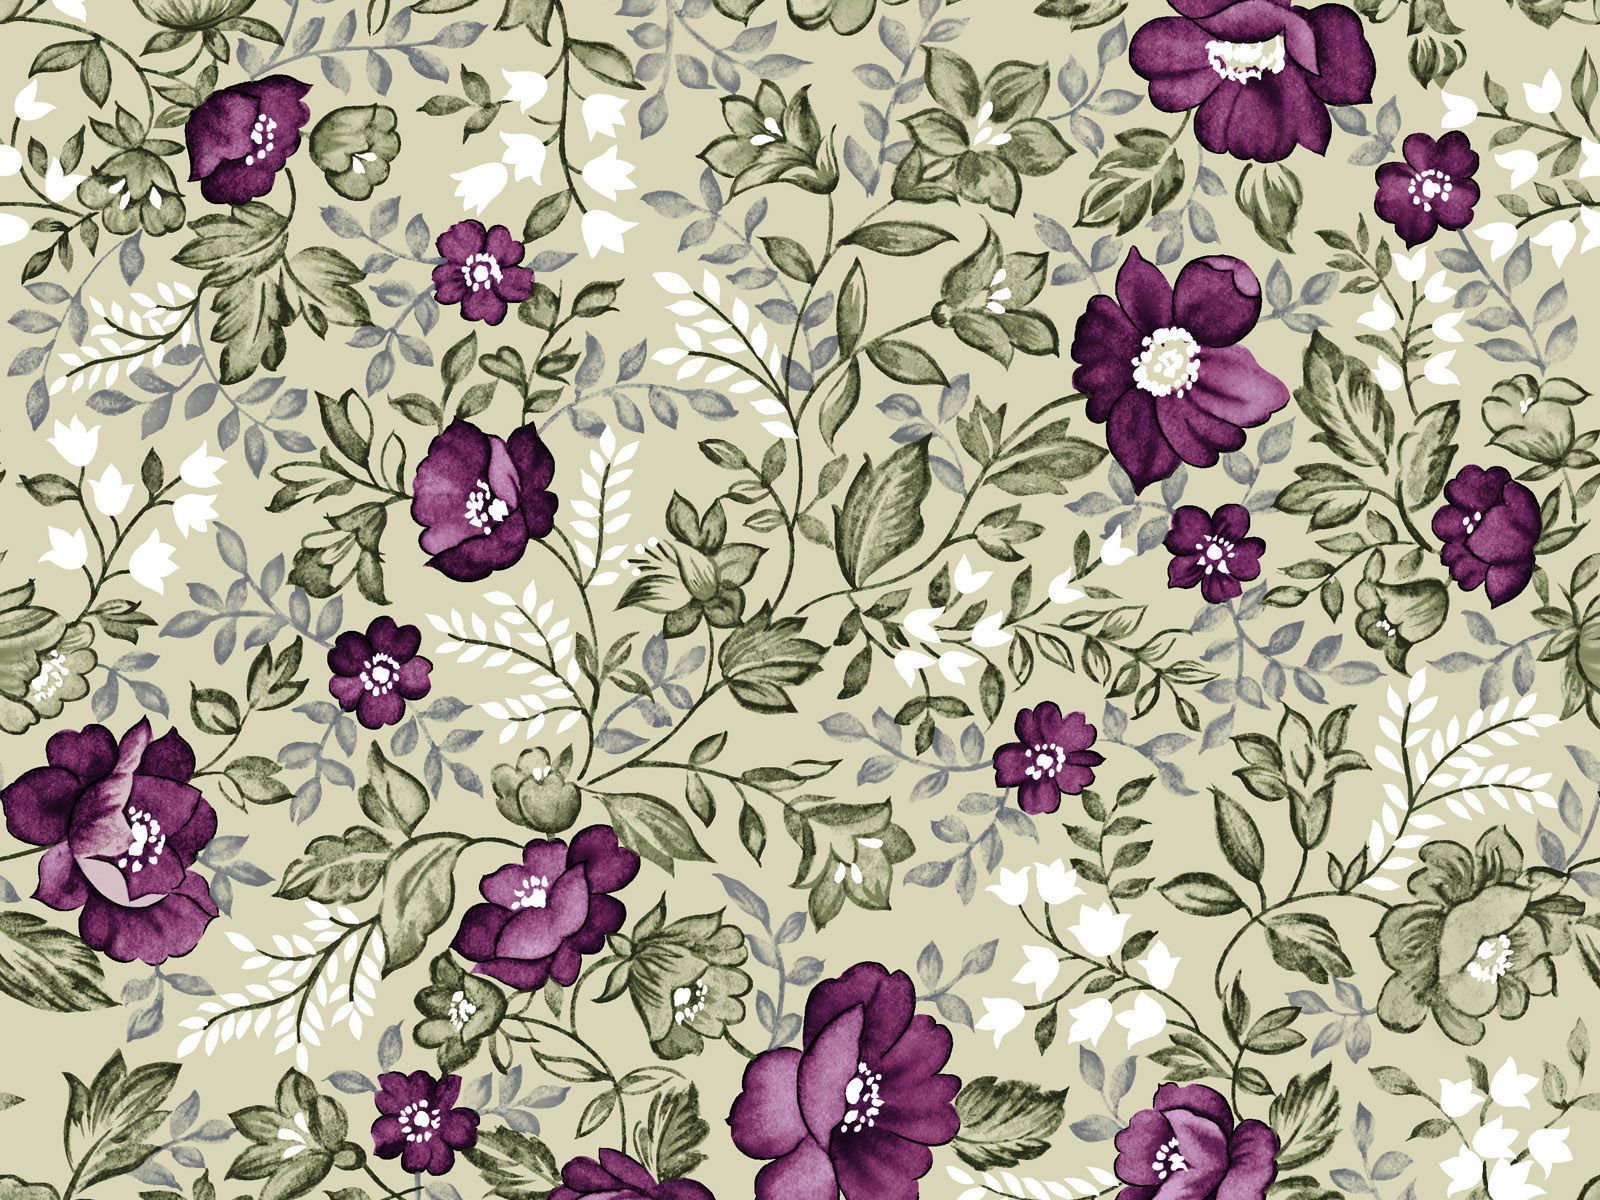 Background wallpaper pattern pattern 1766 - Background patterns